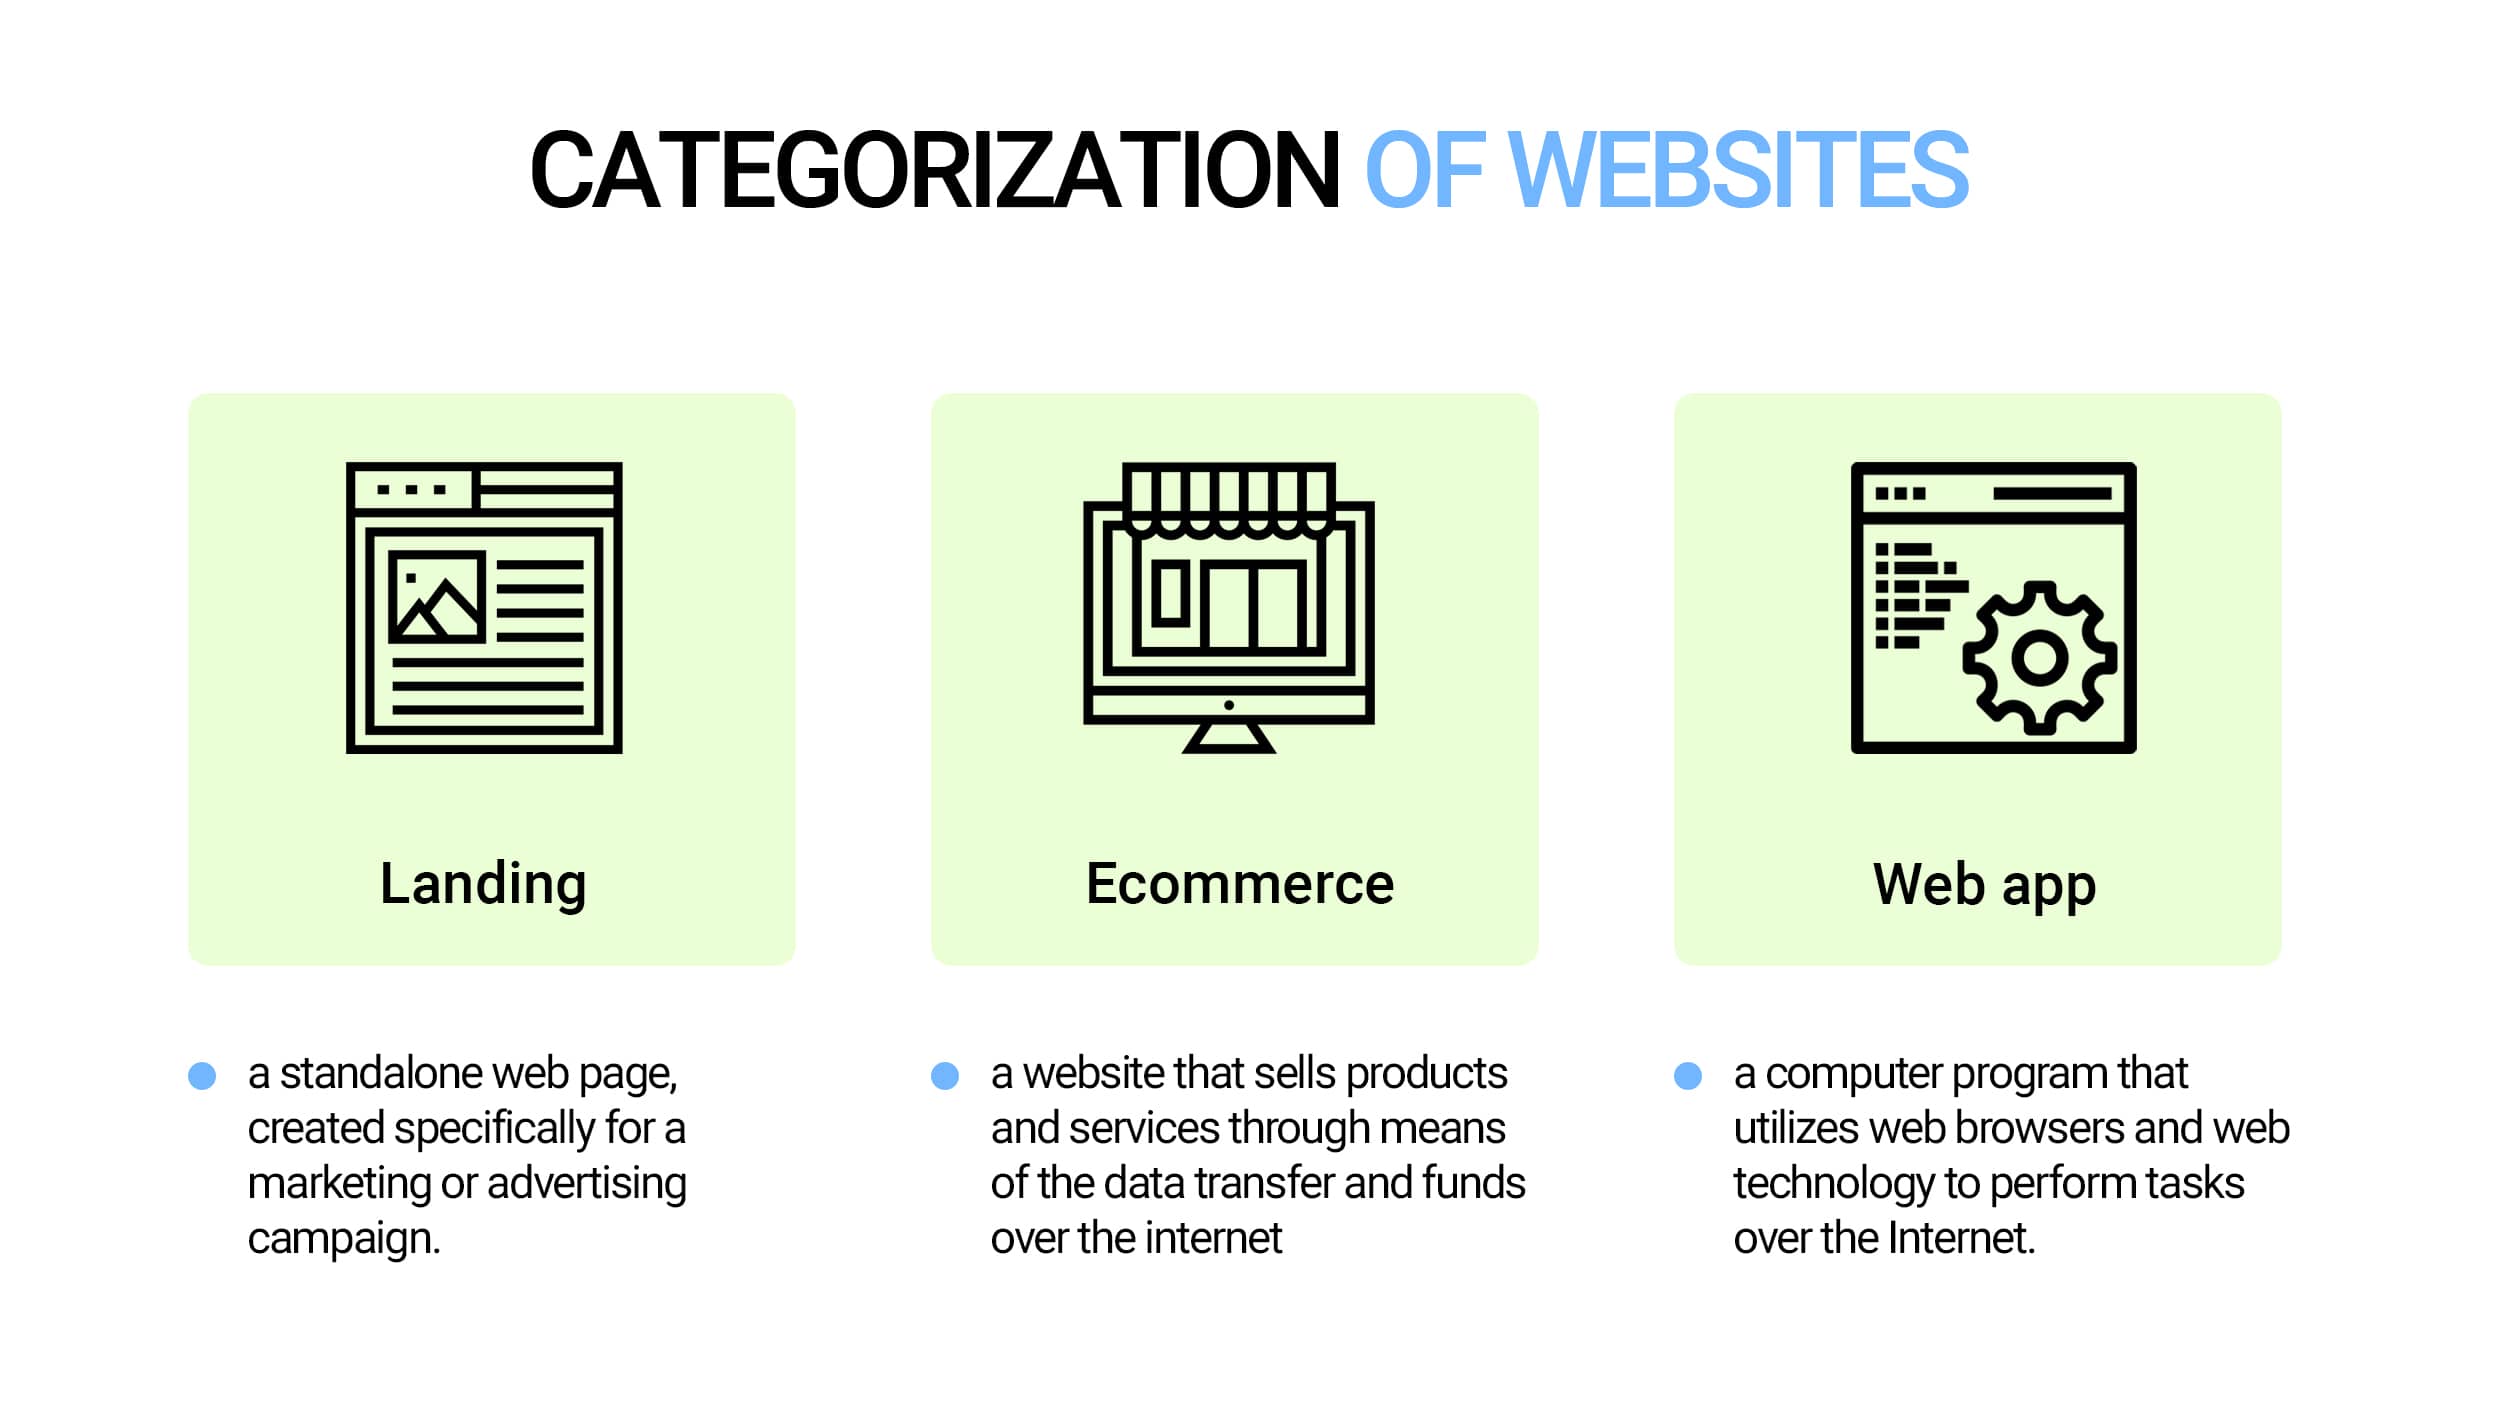 Categorization of websites